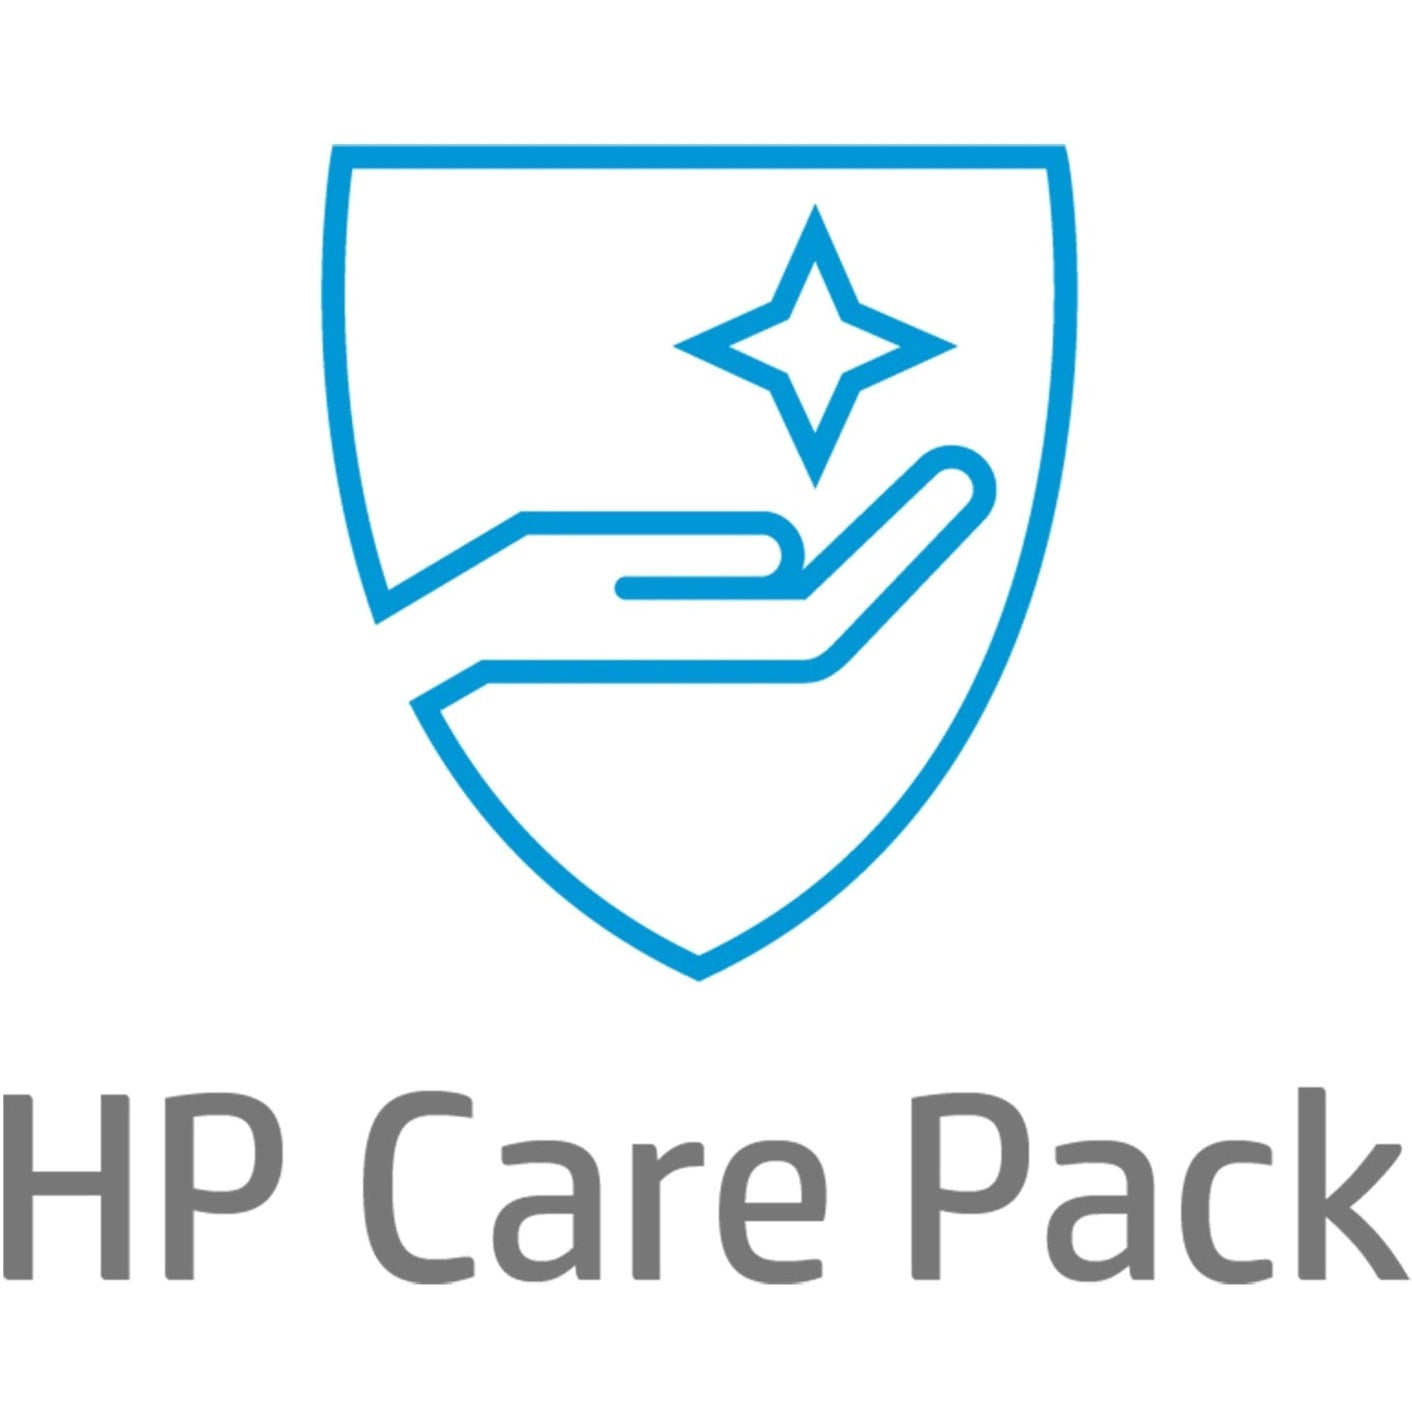 HP Care Pack - 5 Year - Warranty (U7861E)